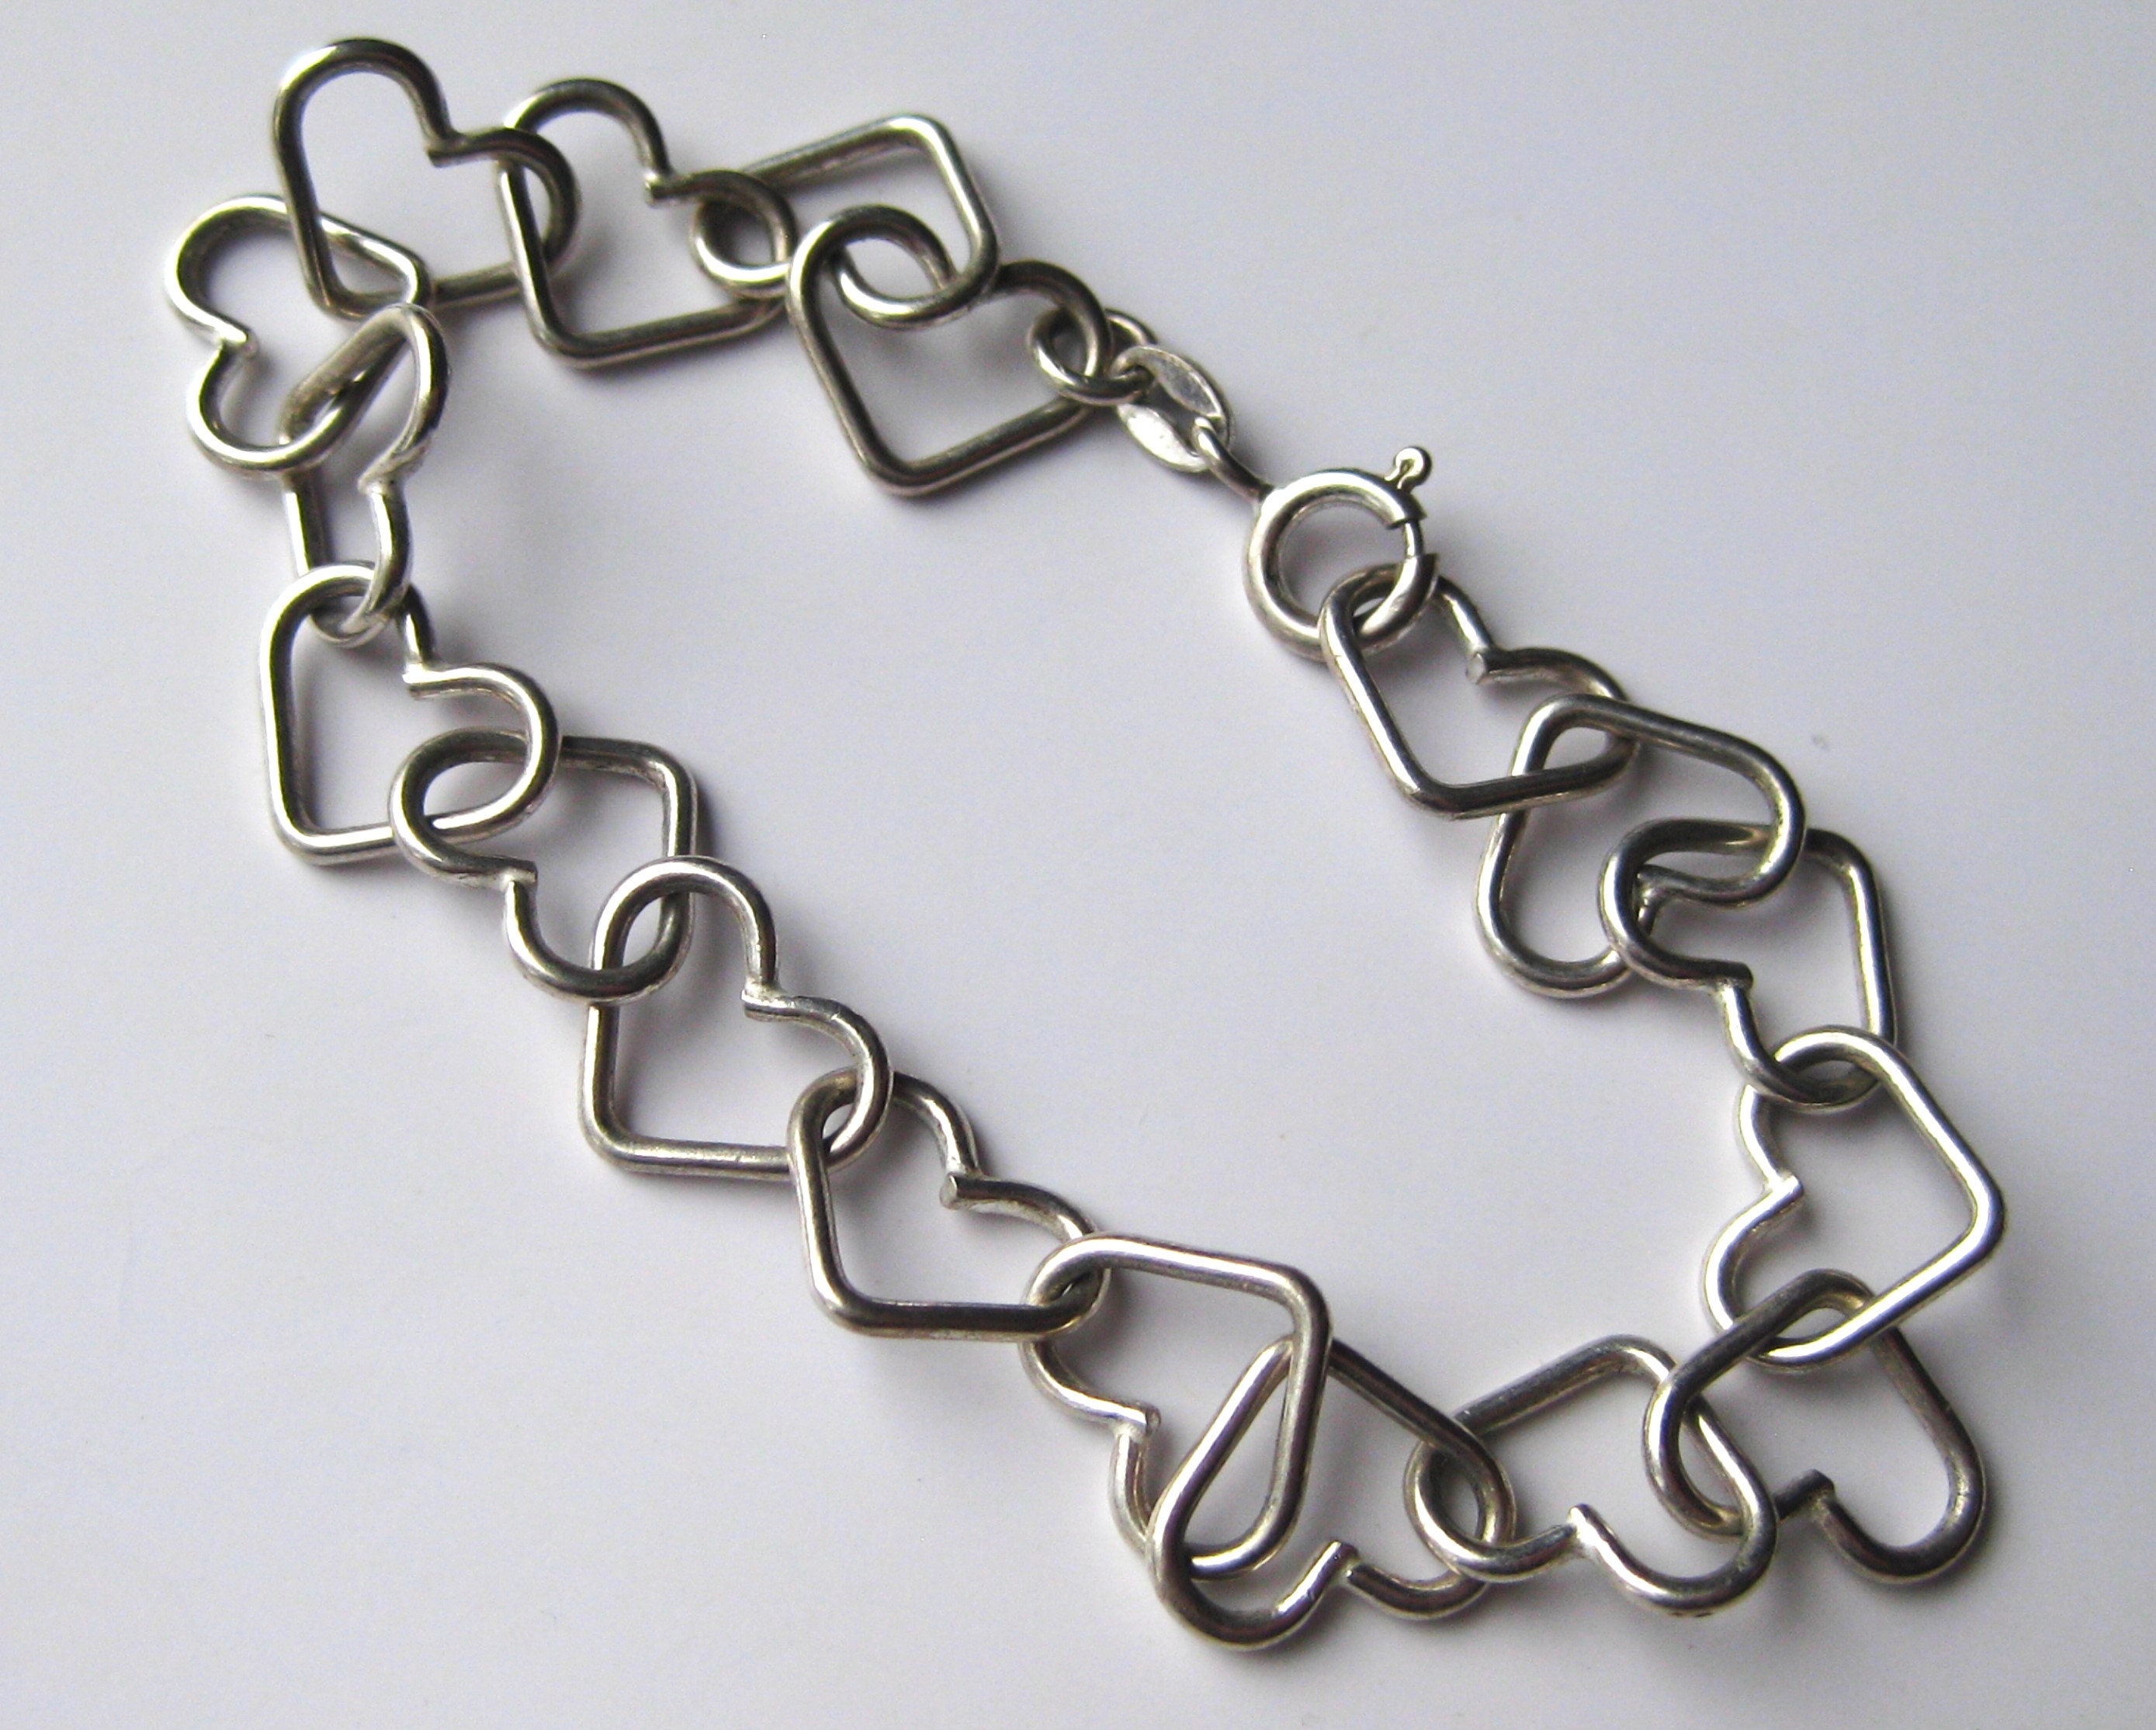 Buy Other shapes online : Sterling silver 925 bracelet with heart connector  17 + 3 cm - Com-forsa S.L.